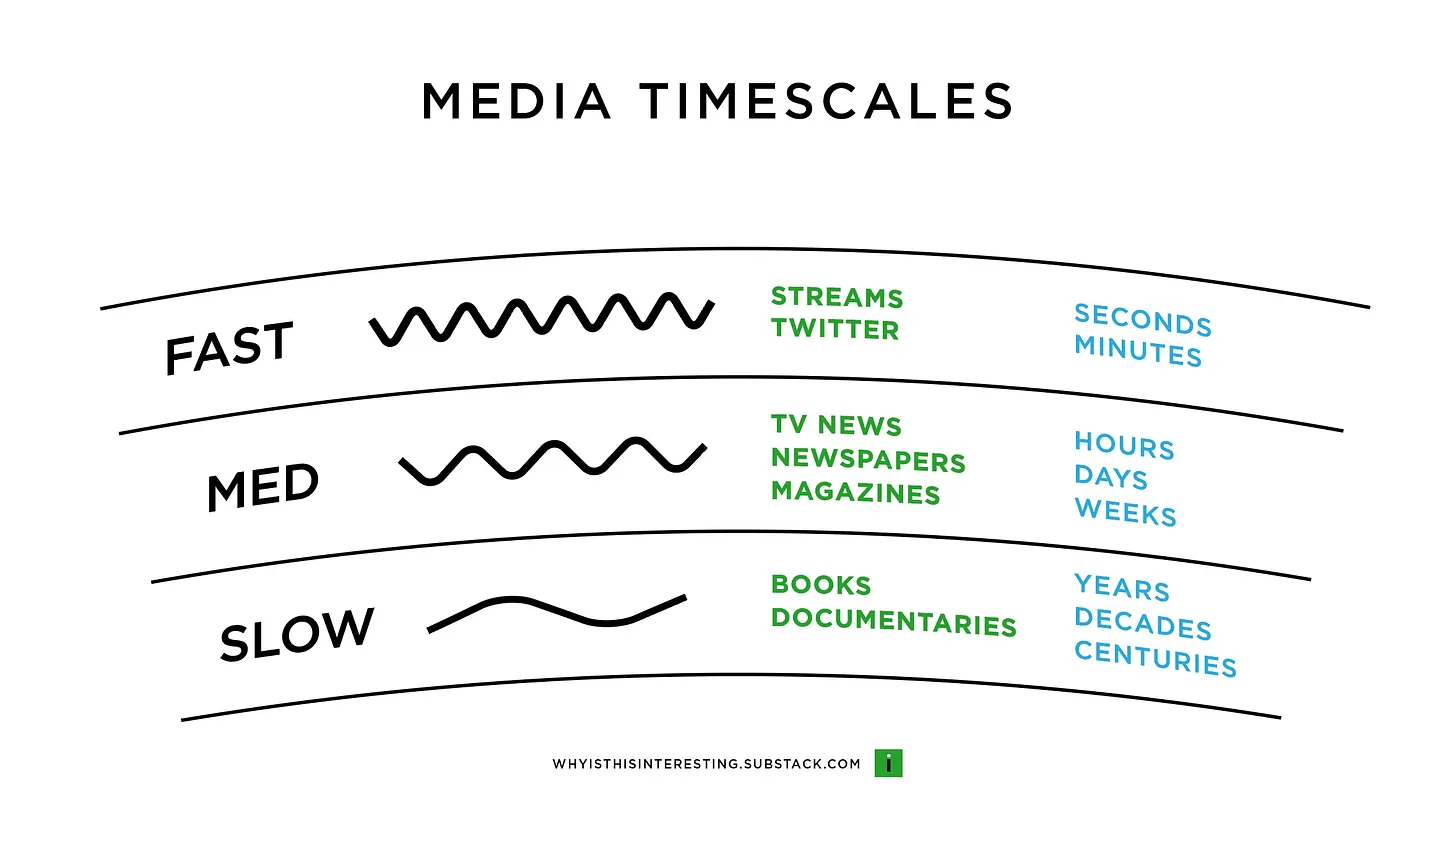 Media timescales diagram.